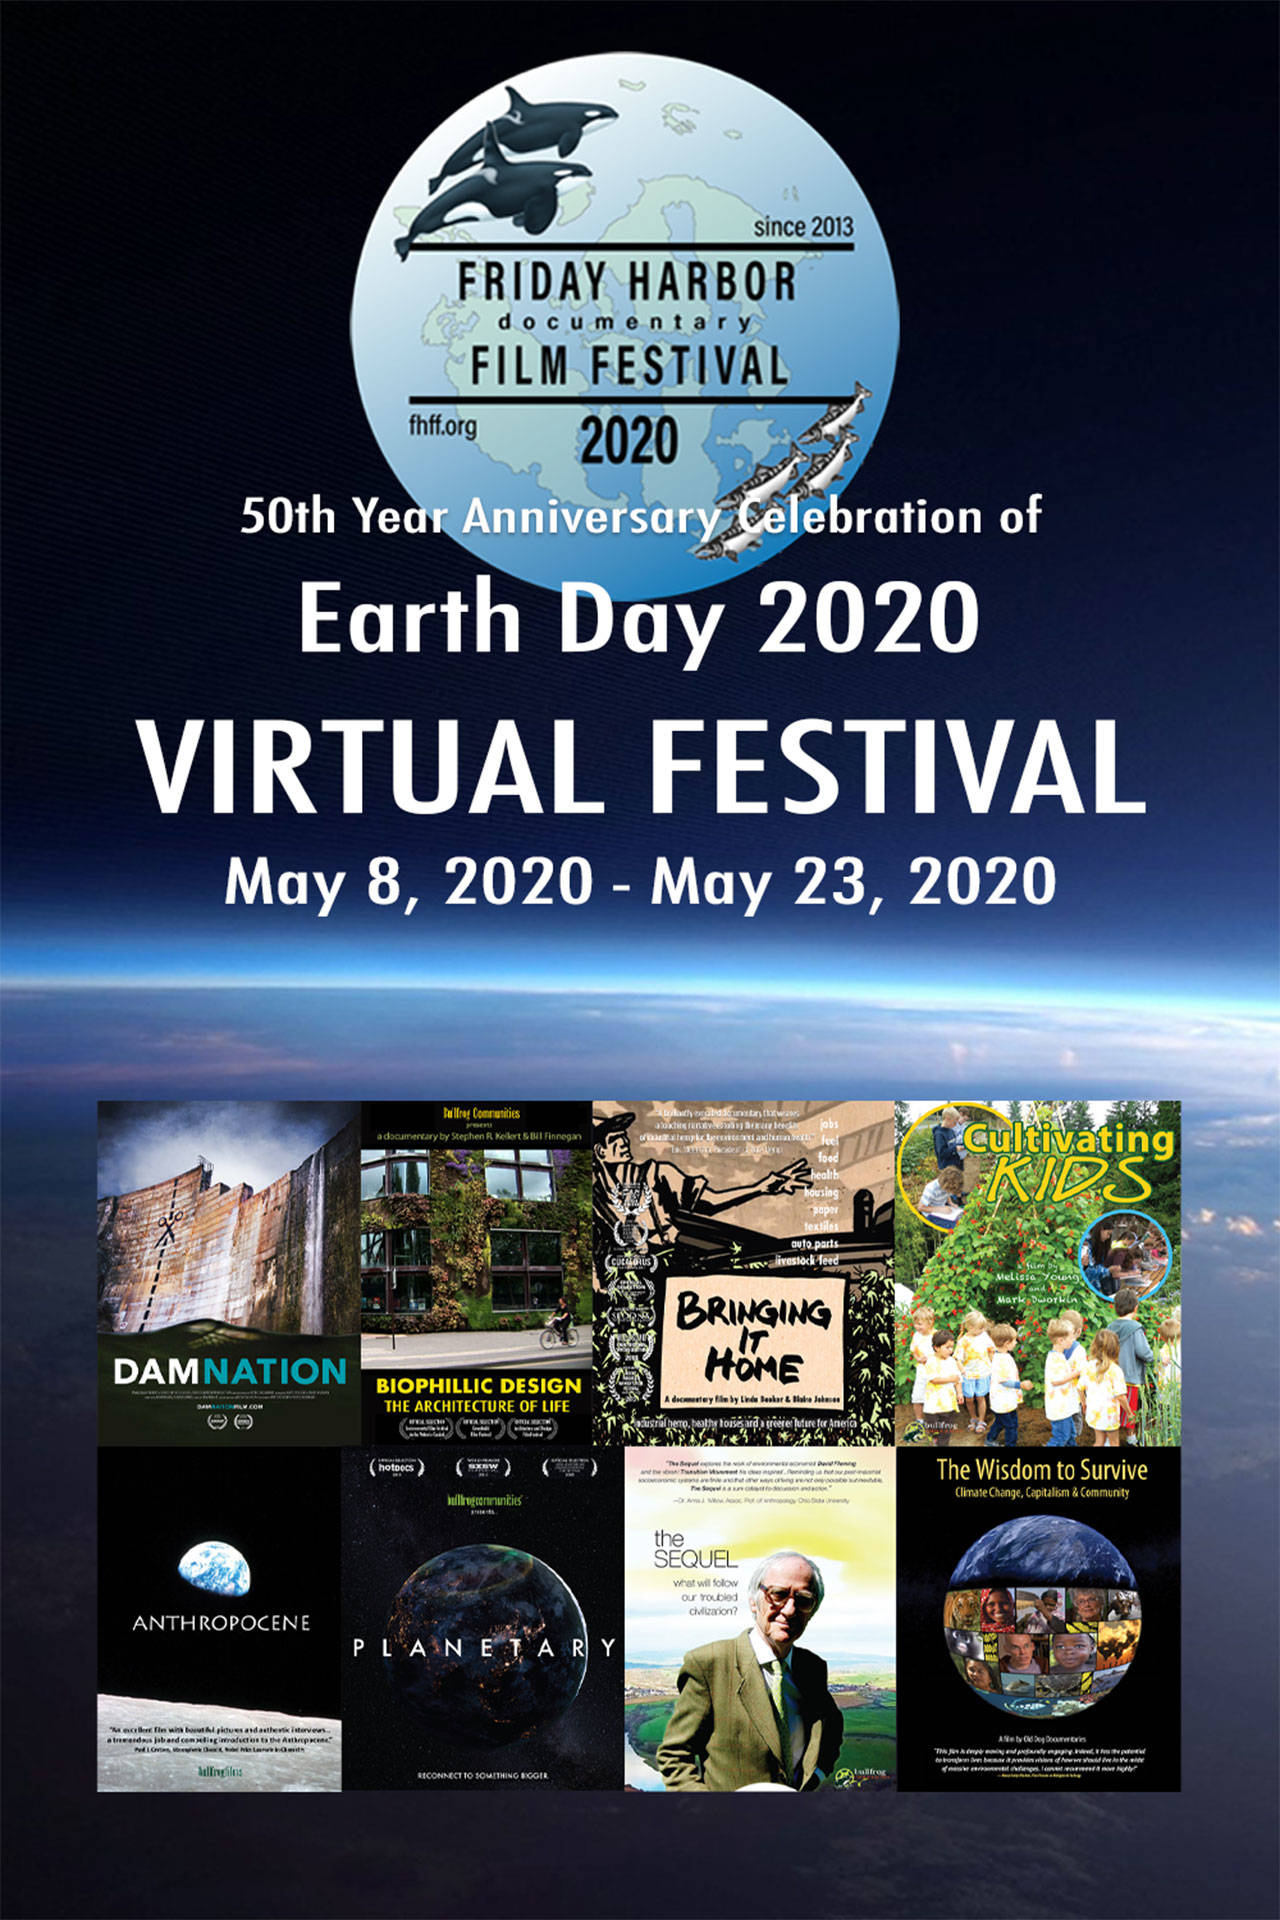 Friday Harbor Film Festival presents a virtual film festival, May 8-23